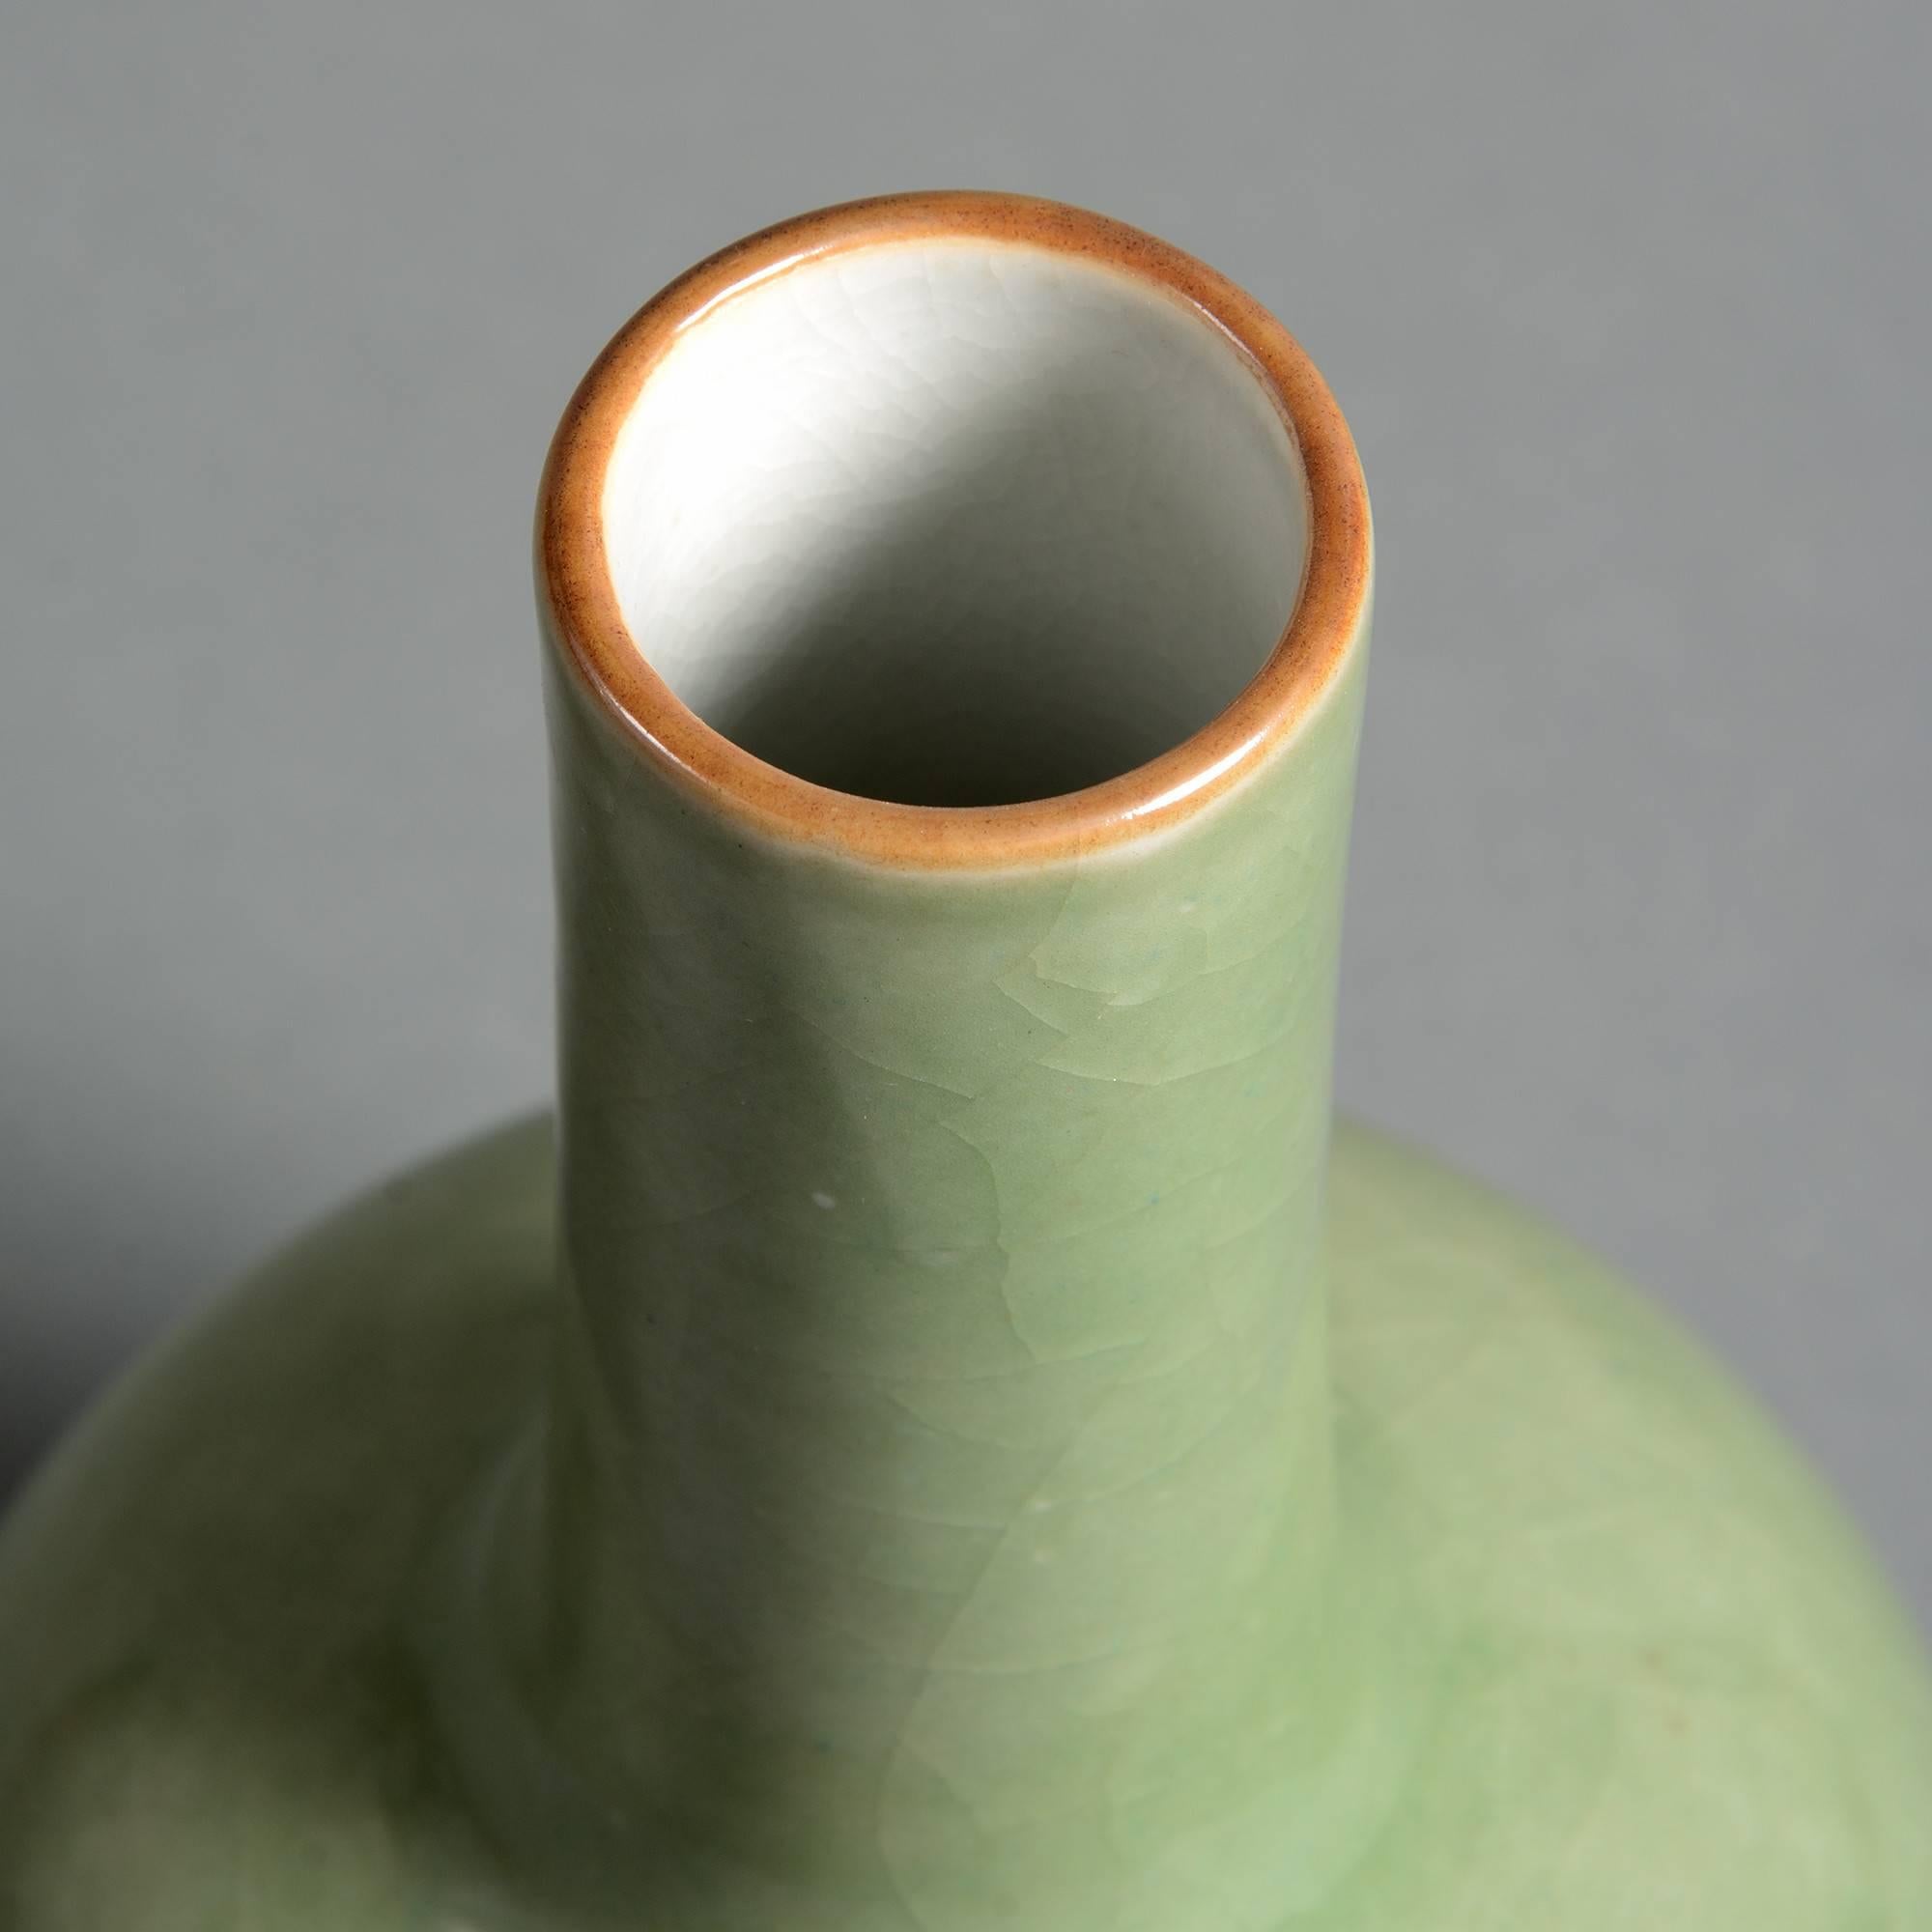 A late 19th century celadon porcelain bottle vase having a soft crackle glaze throughout. 

Qing dynasty, Guangxu Period (1875-1908).